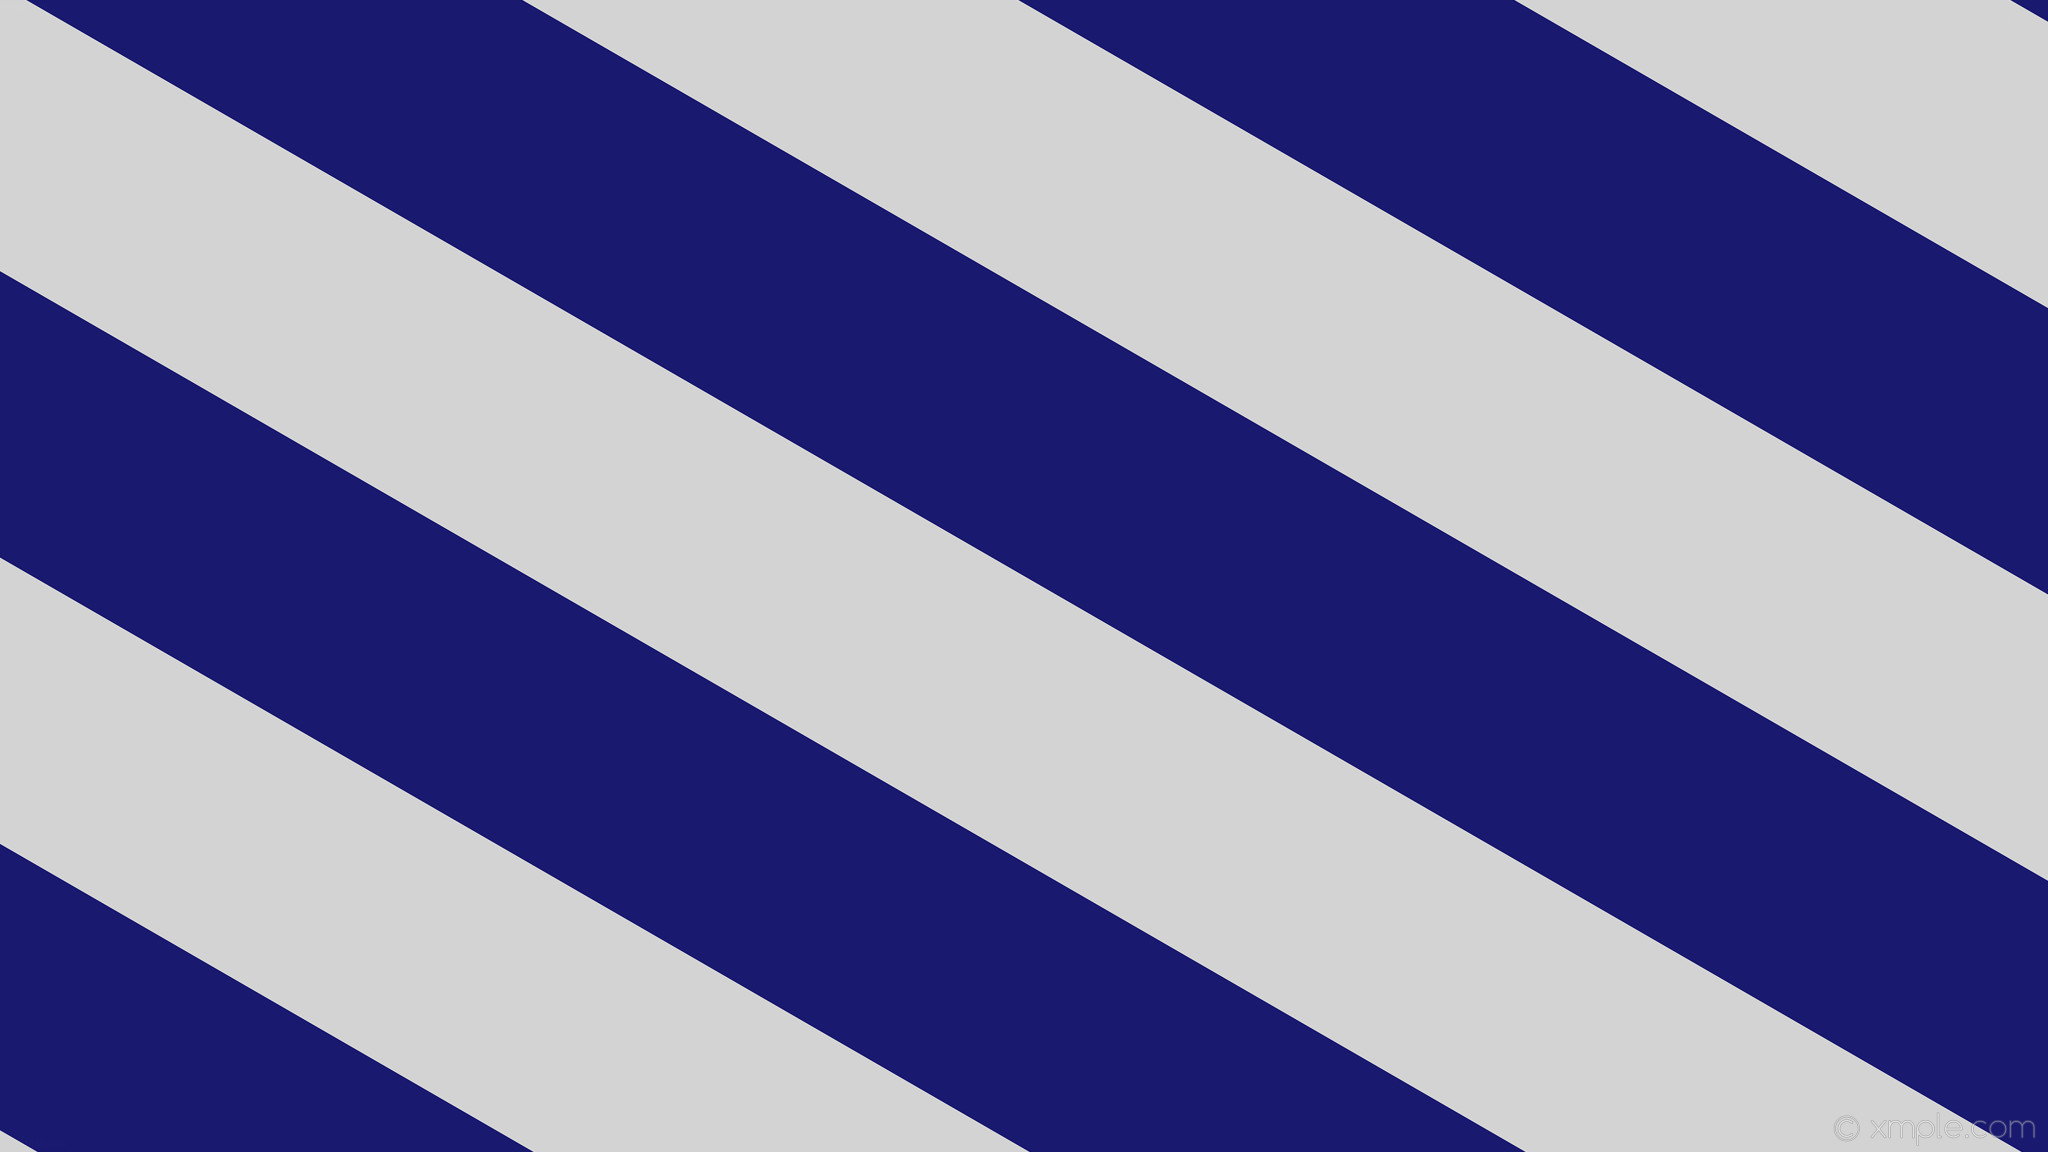 2048x1152 wallpaper streaks blue grey stripes lines midnight blue light gray #191970  #d3d3d3 diagonal 150